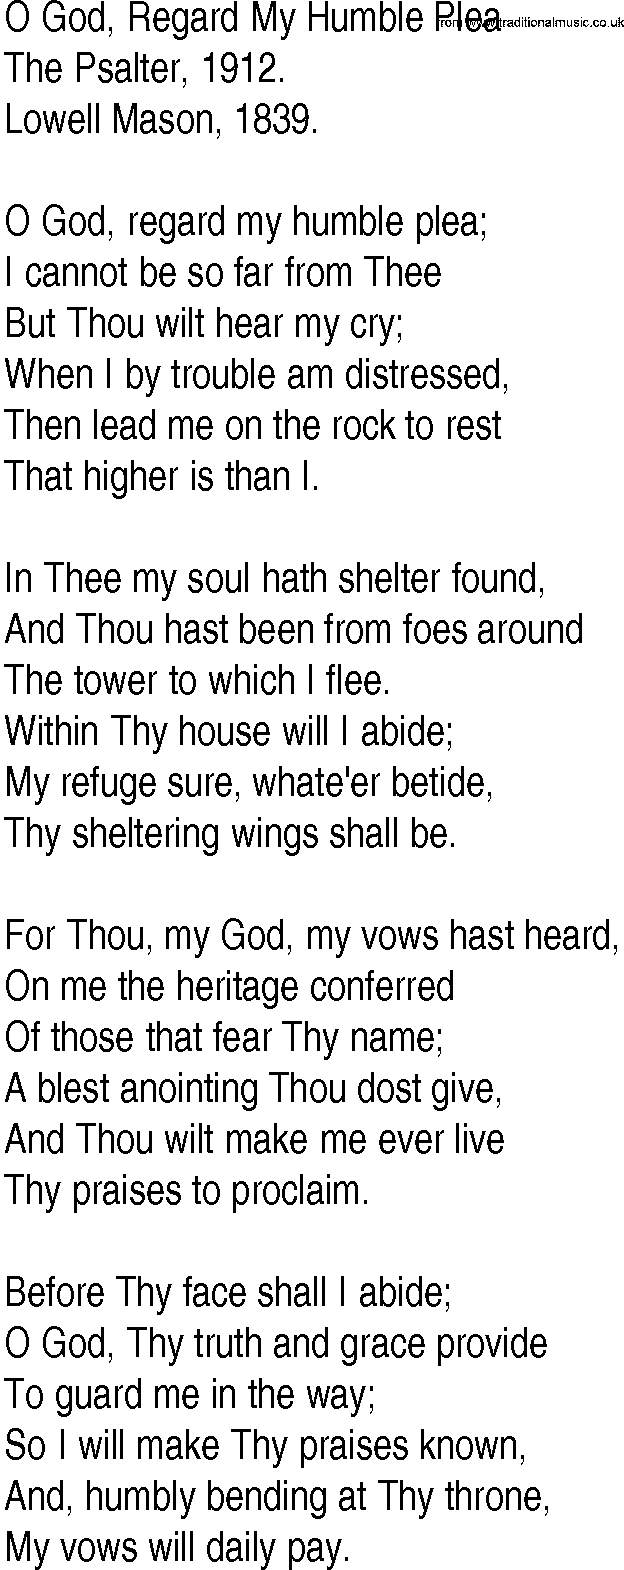 Hymn and Gospel Song: O God, Regard My Humble Plea by The Psalter lyrics